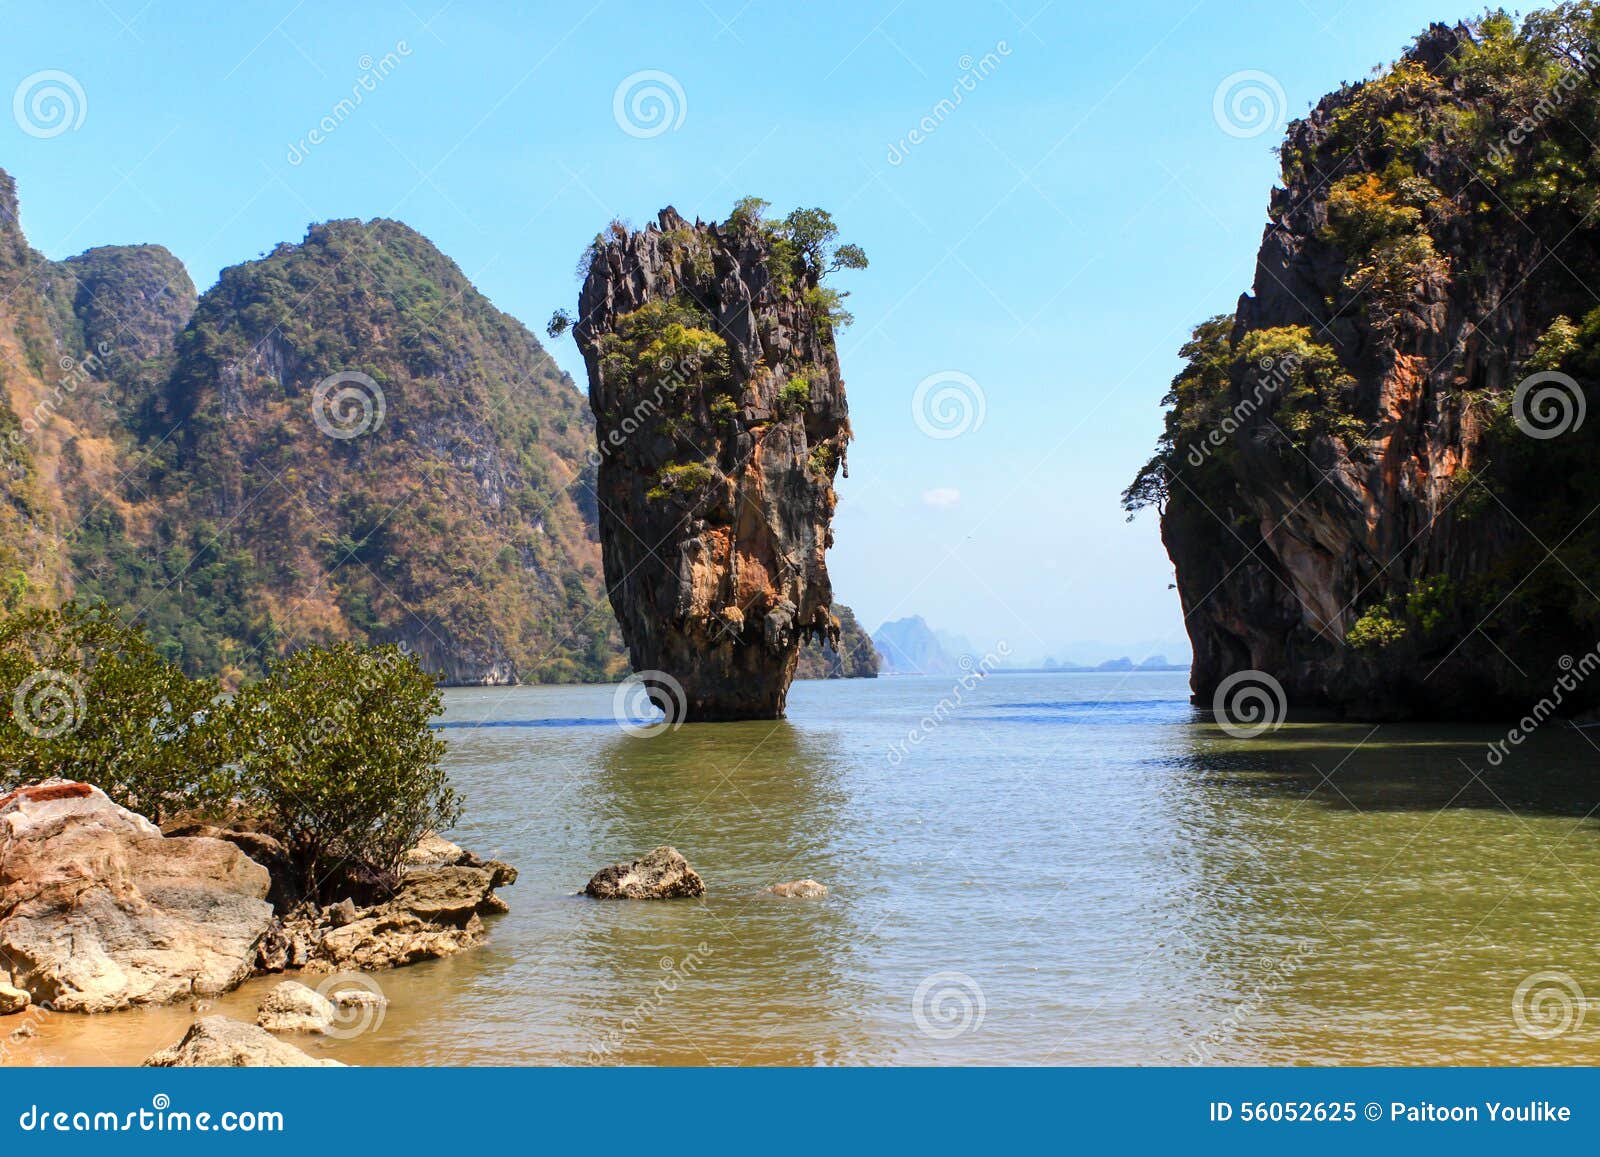 Ko Tapu or James Bond Island Stock Image - Image of view, scenics: 56052625